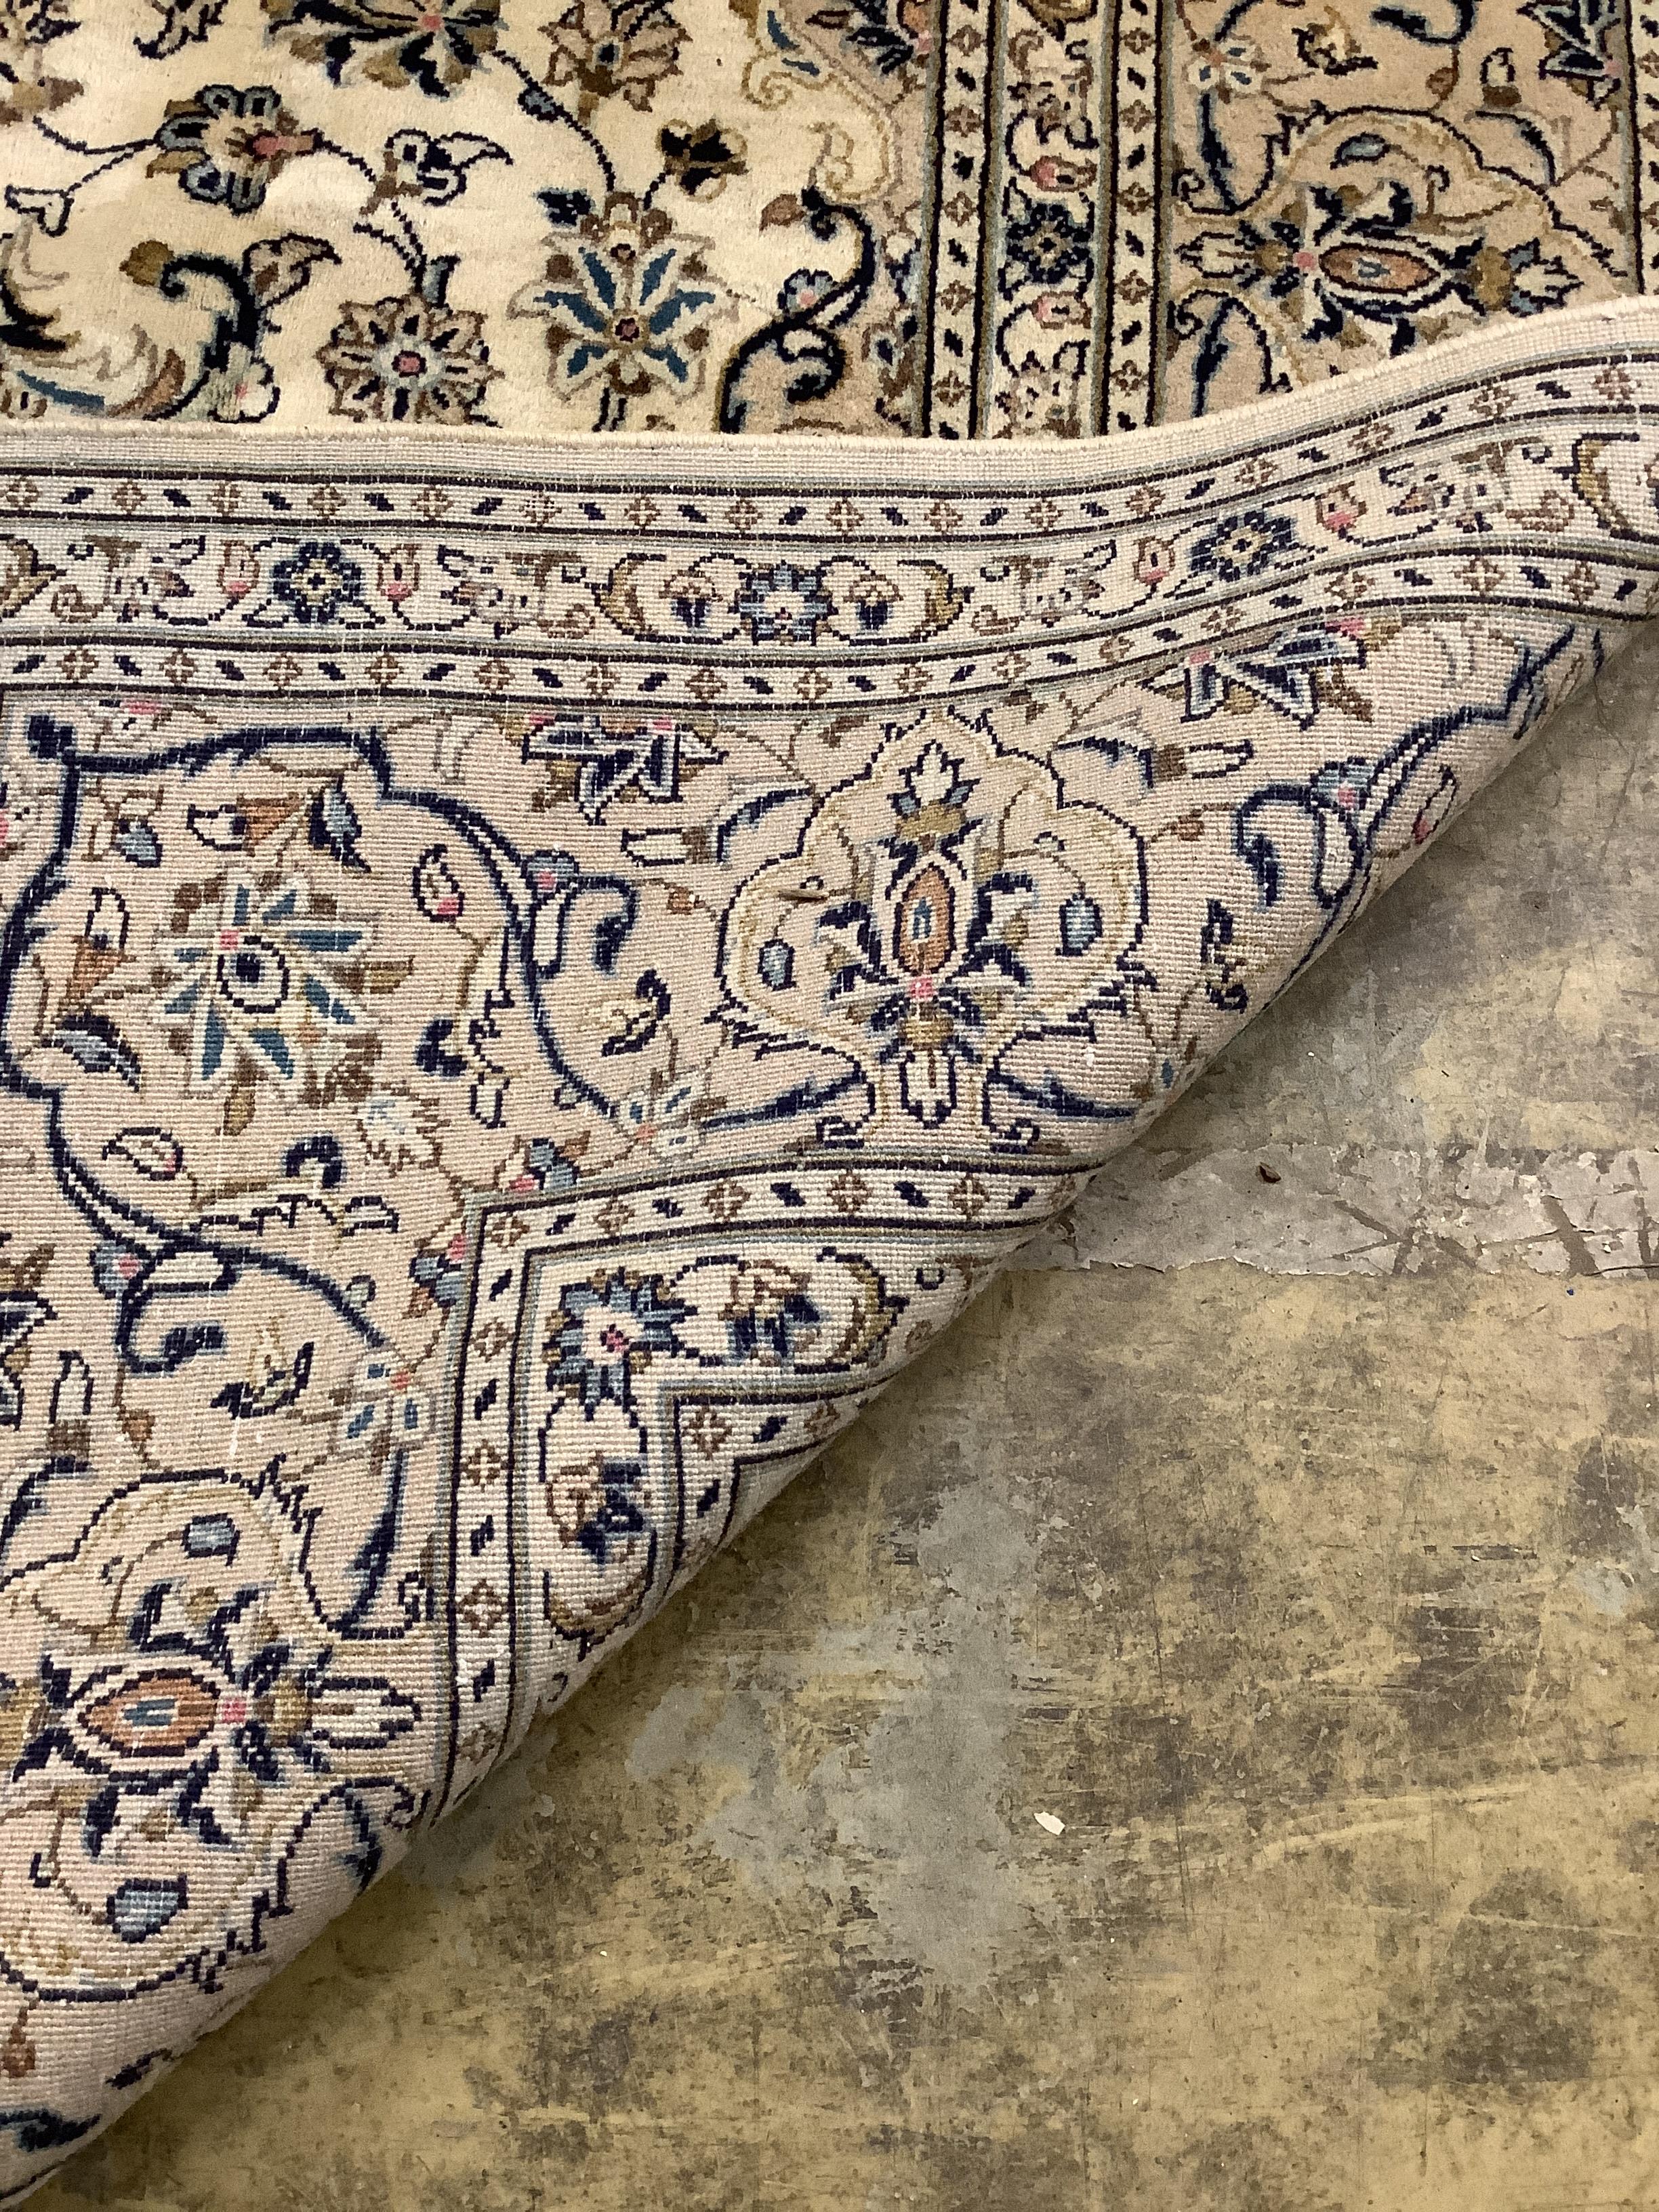 A fine Kashan ivory ground carpet, 291 x 195cm